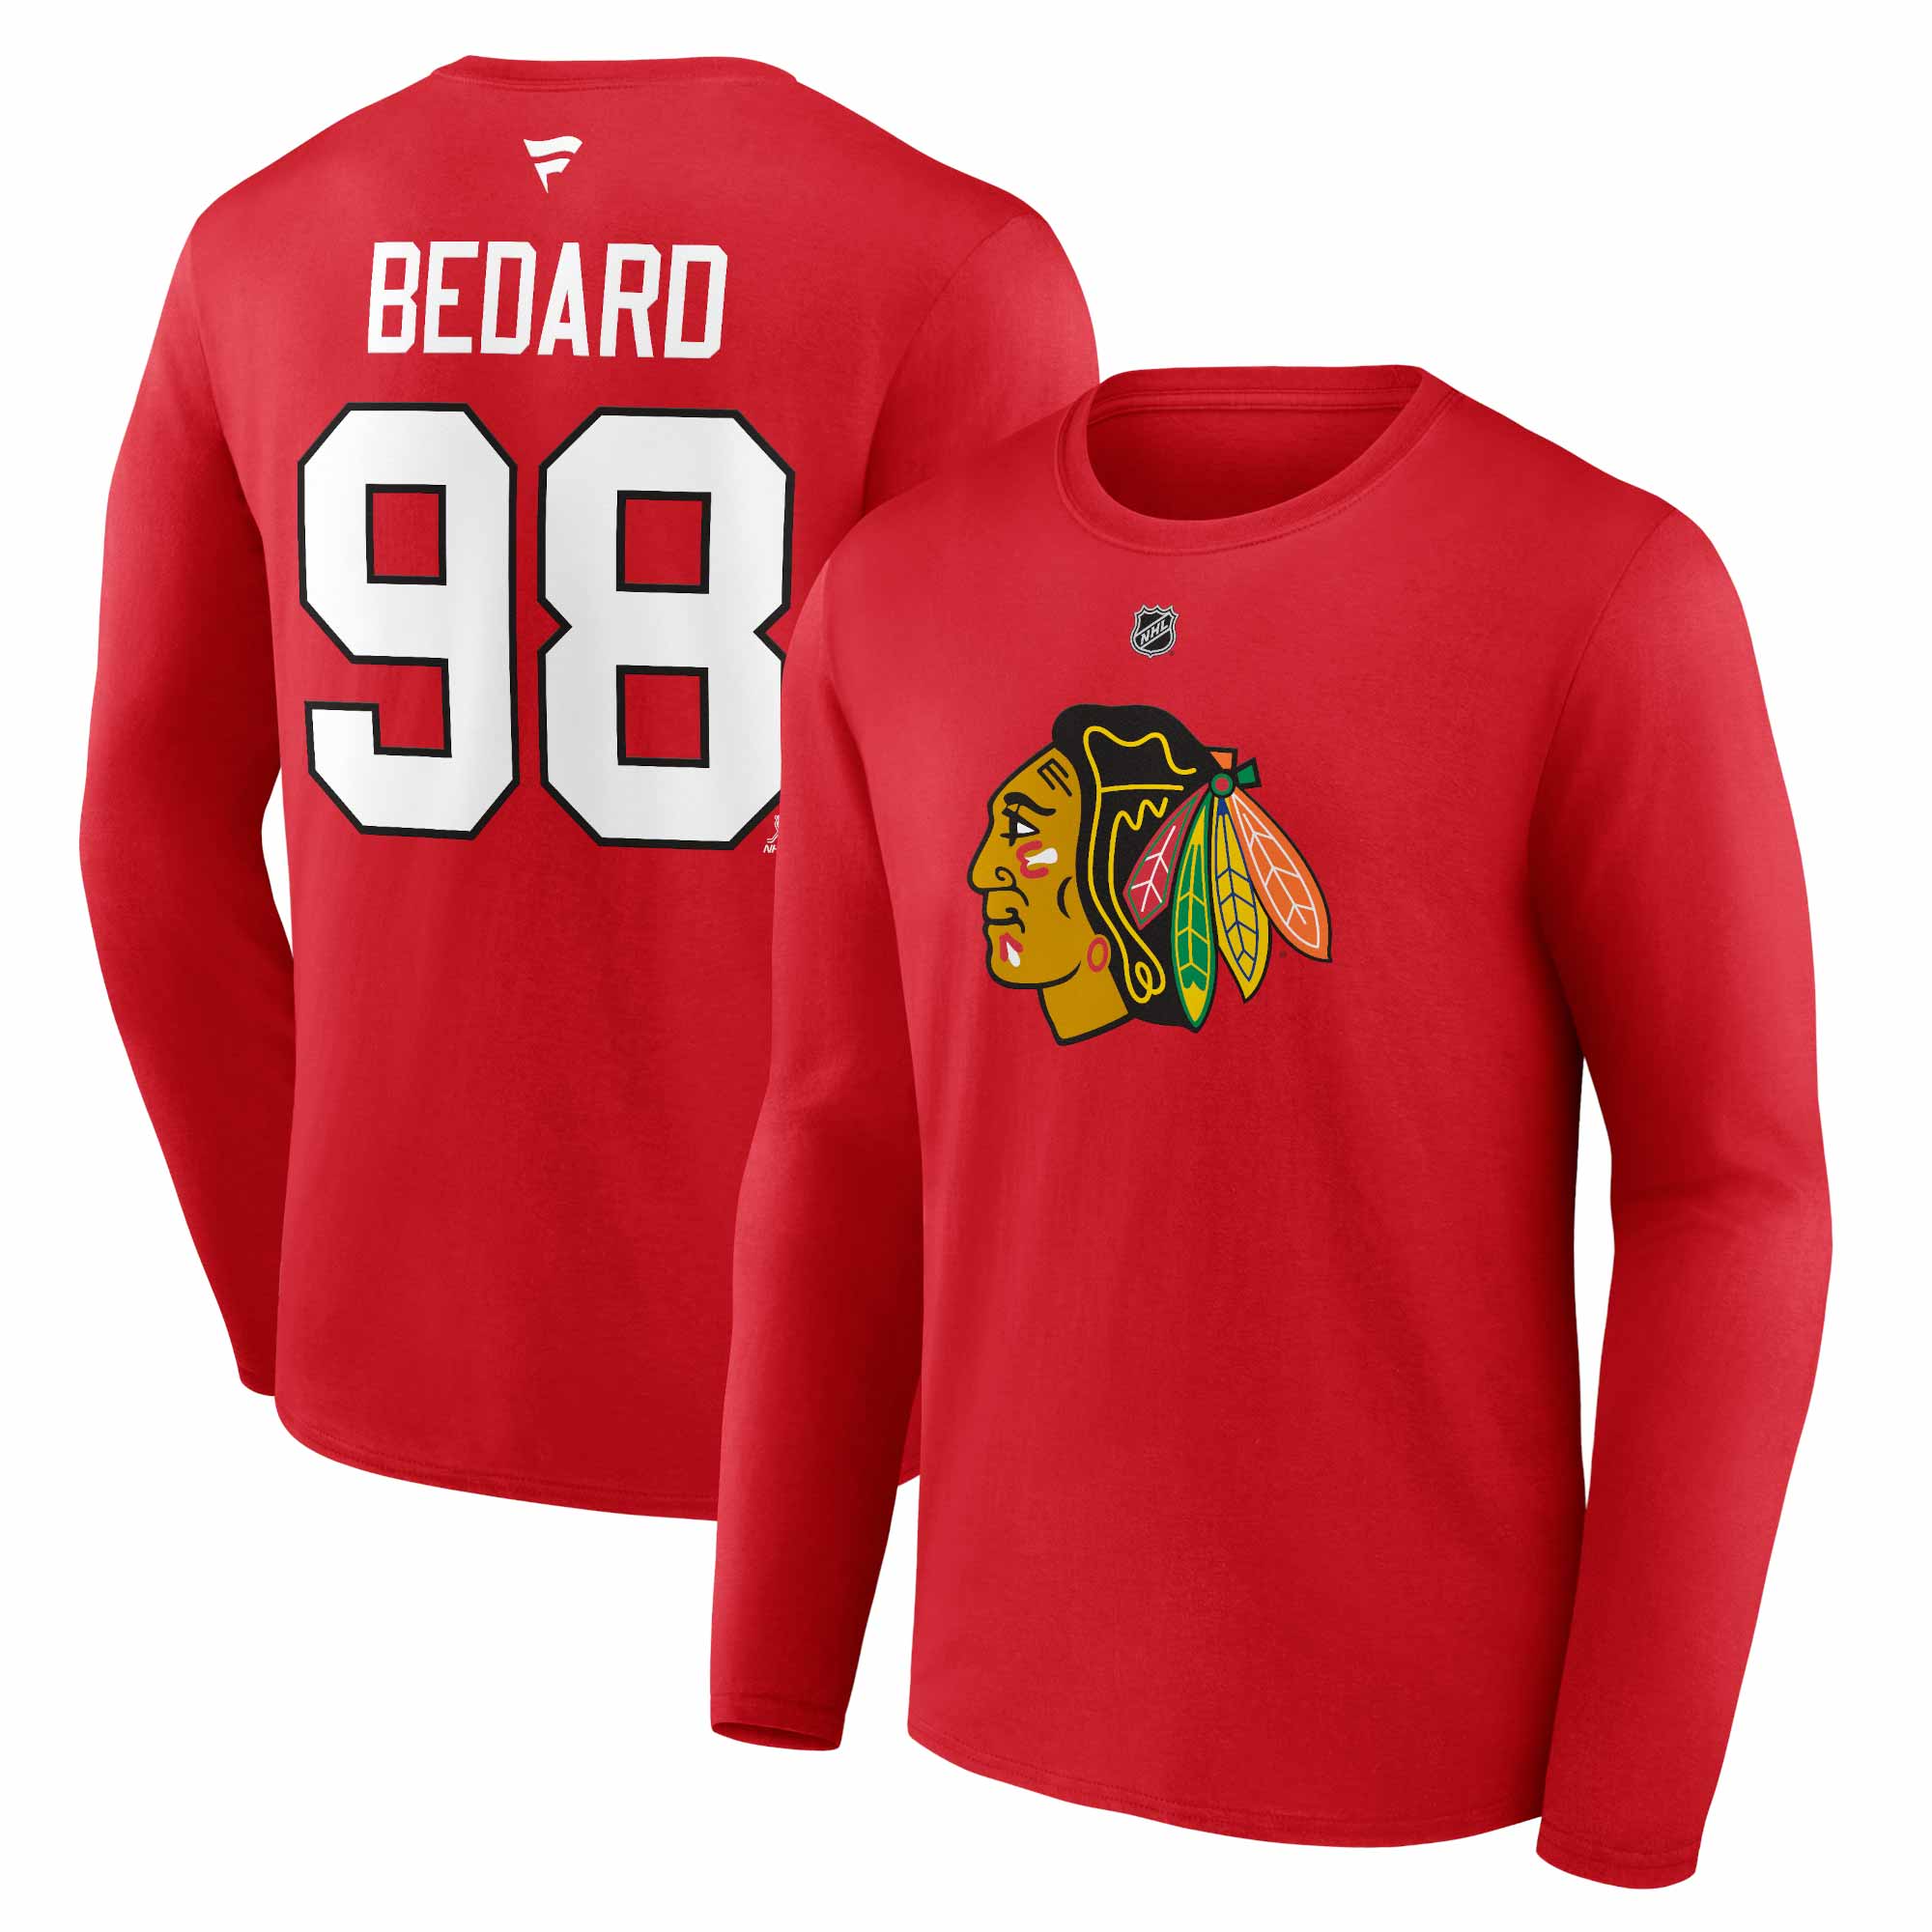 Men's Chicago Blackhawks connor bedard 2023 shirt, hoodie, longsleeve tee,  sweater